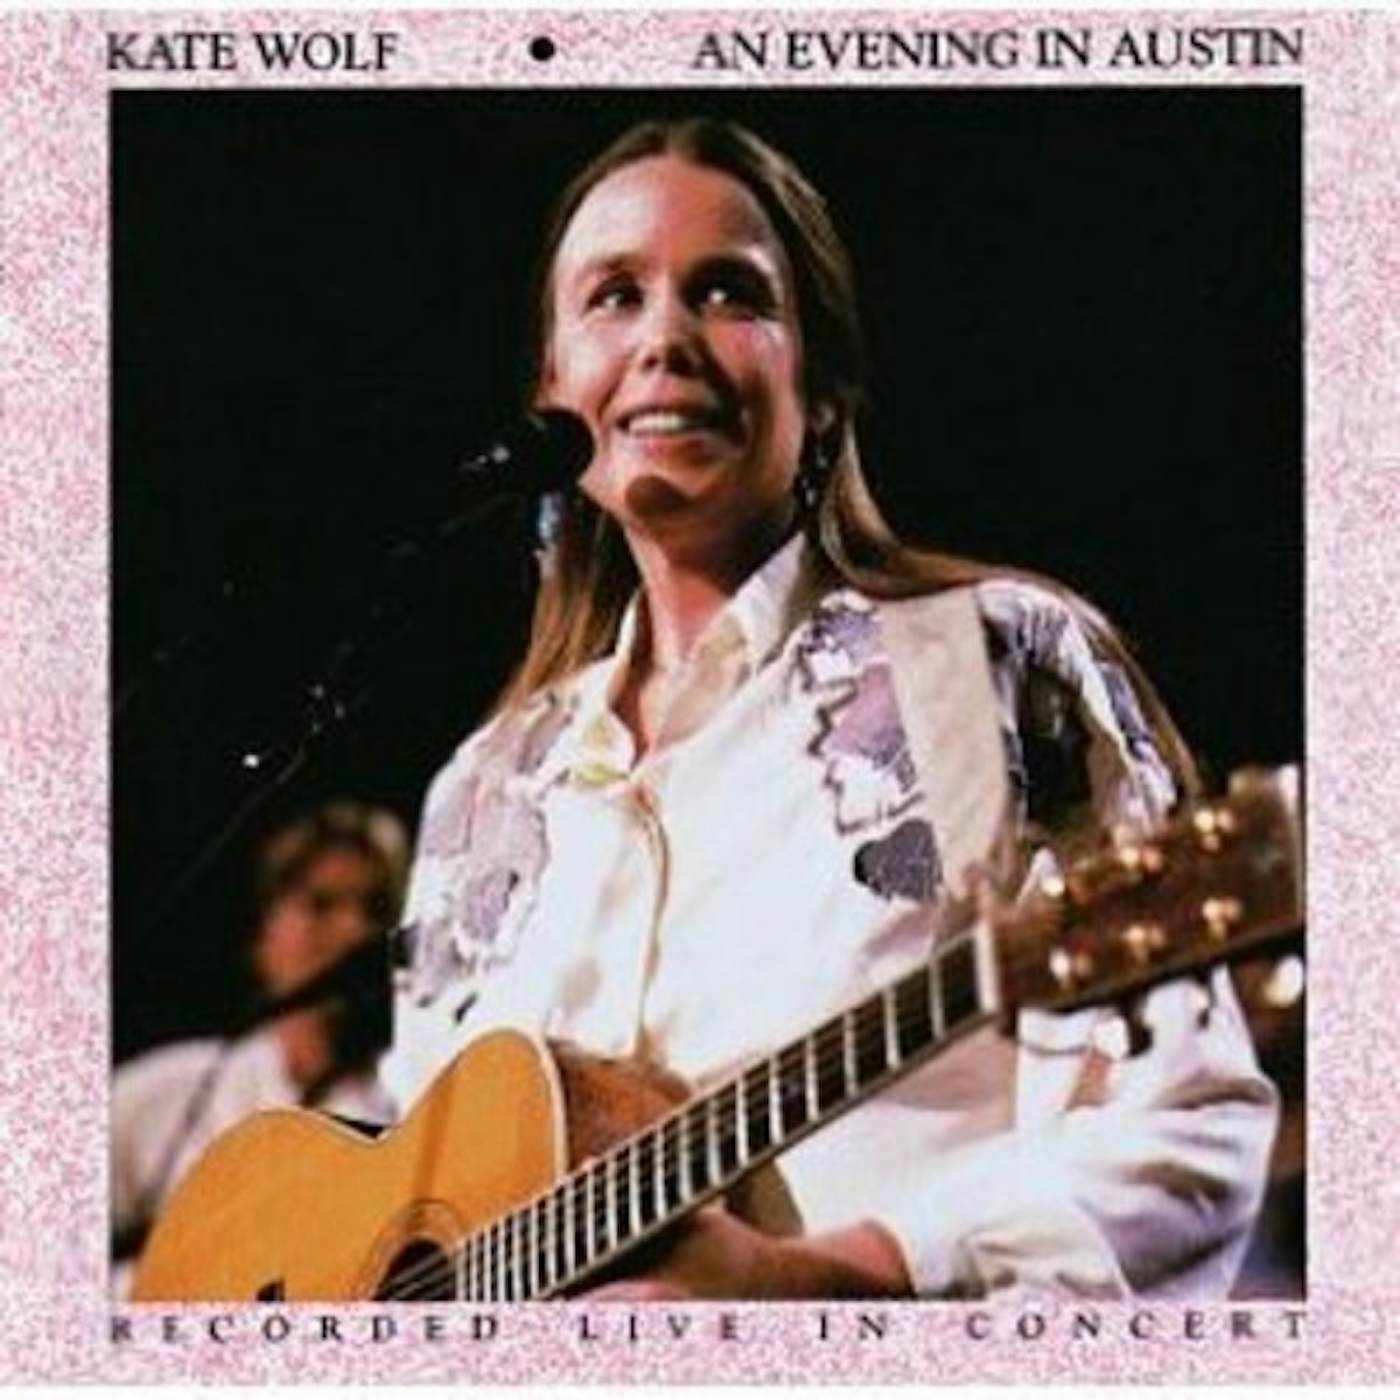 Kate Wolf EVENING IN AUSTIN DVD